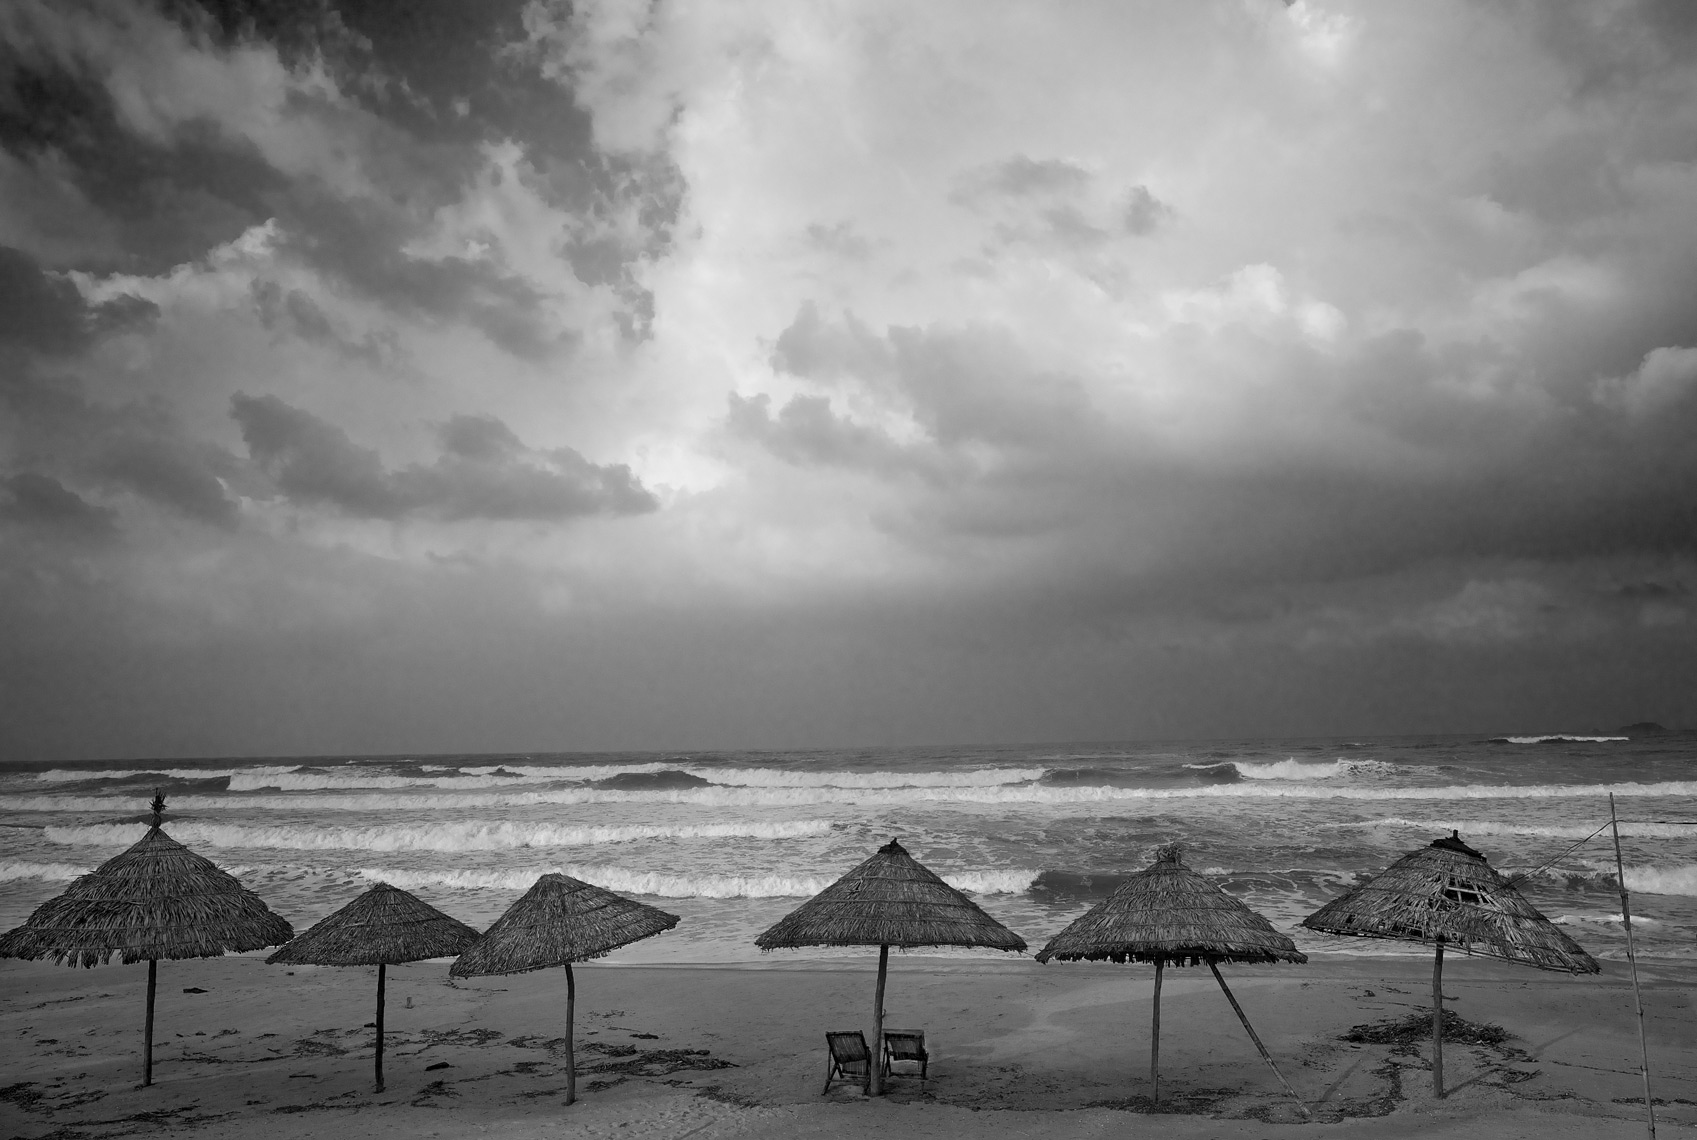 Clearing skies on China Beach Viet Nam/Steve Mason Photography